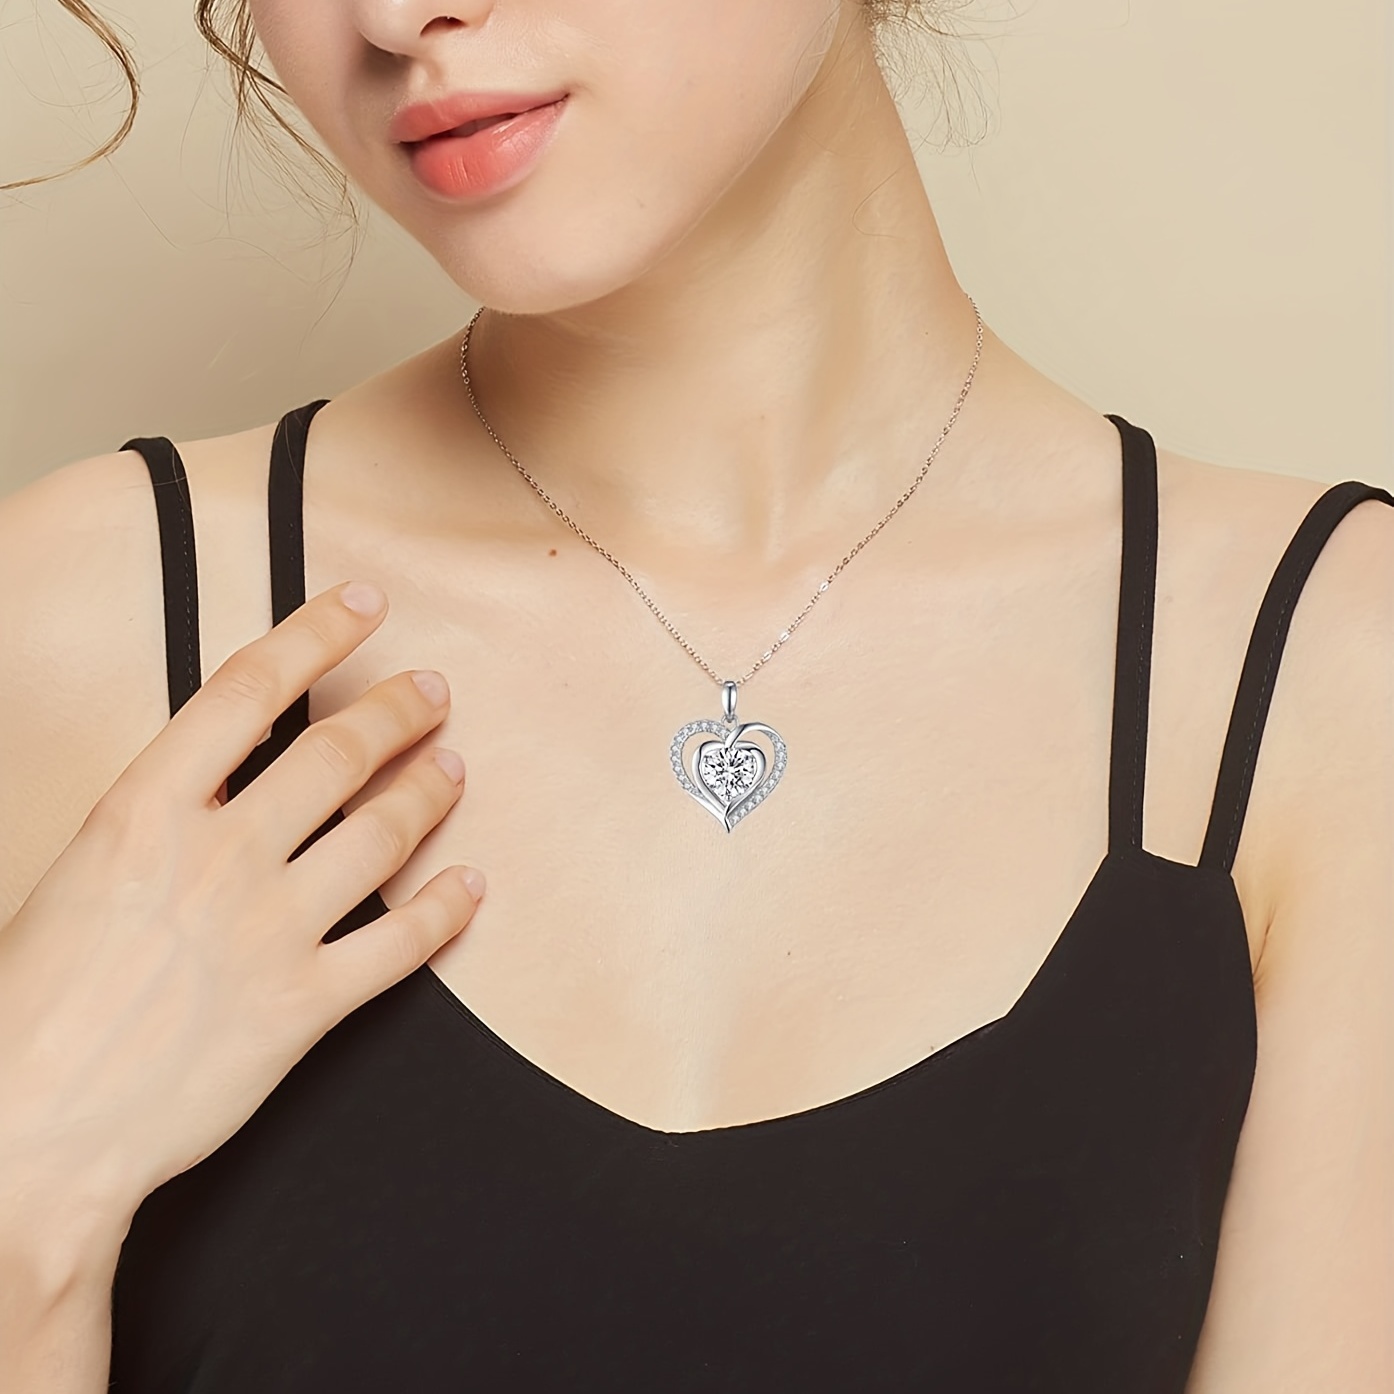 Women's Diamond Heart Pendant Chain Necklace in Sterling Silver - Silver